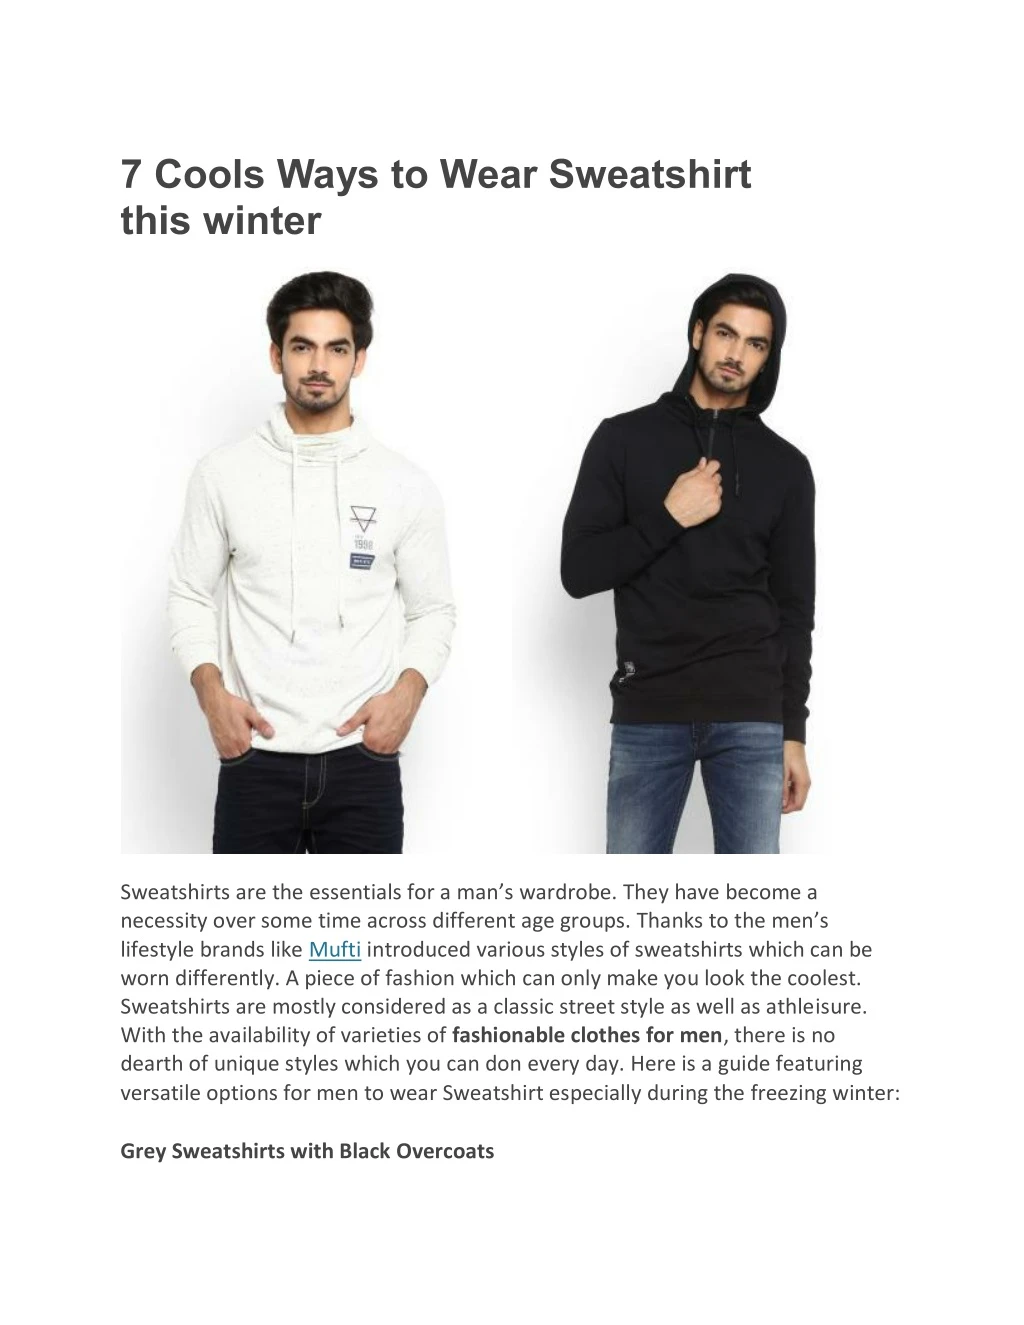 7 cools ways to wear sweatshirt this winter